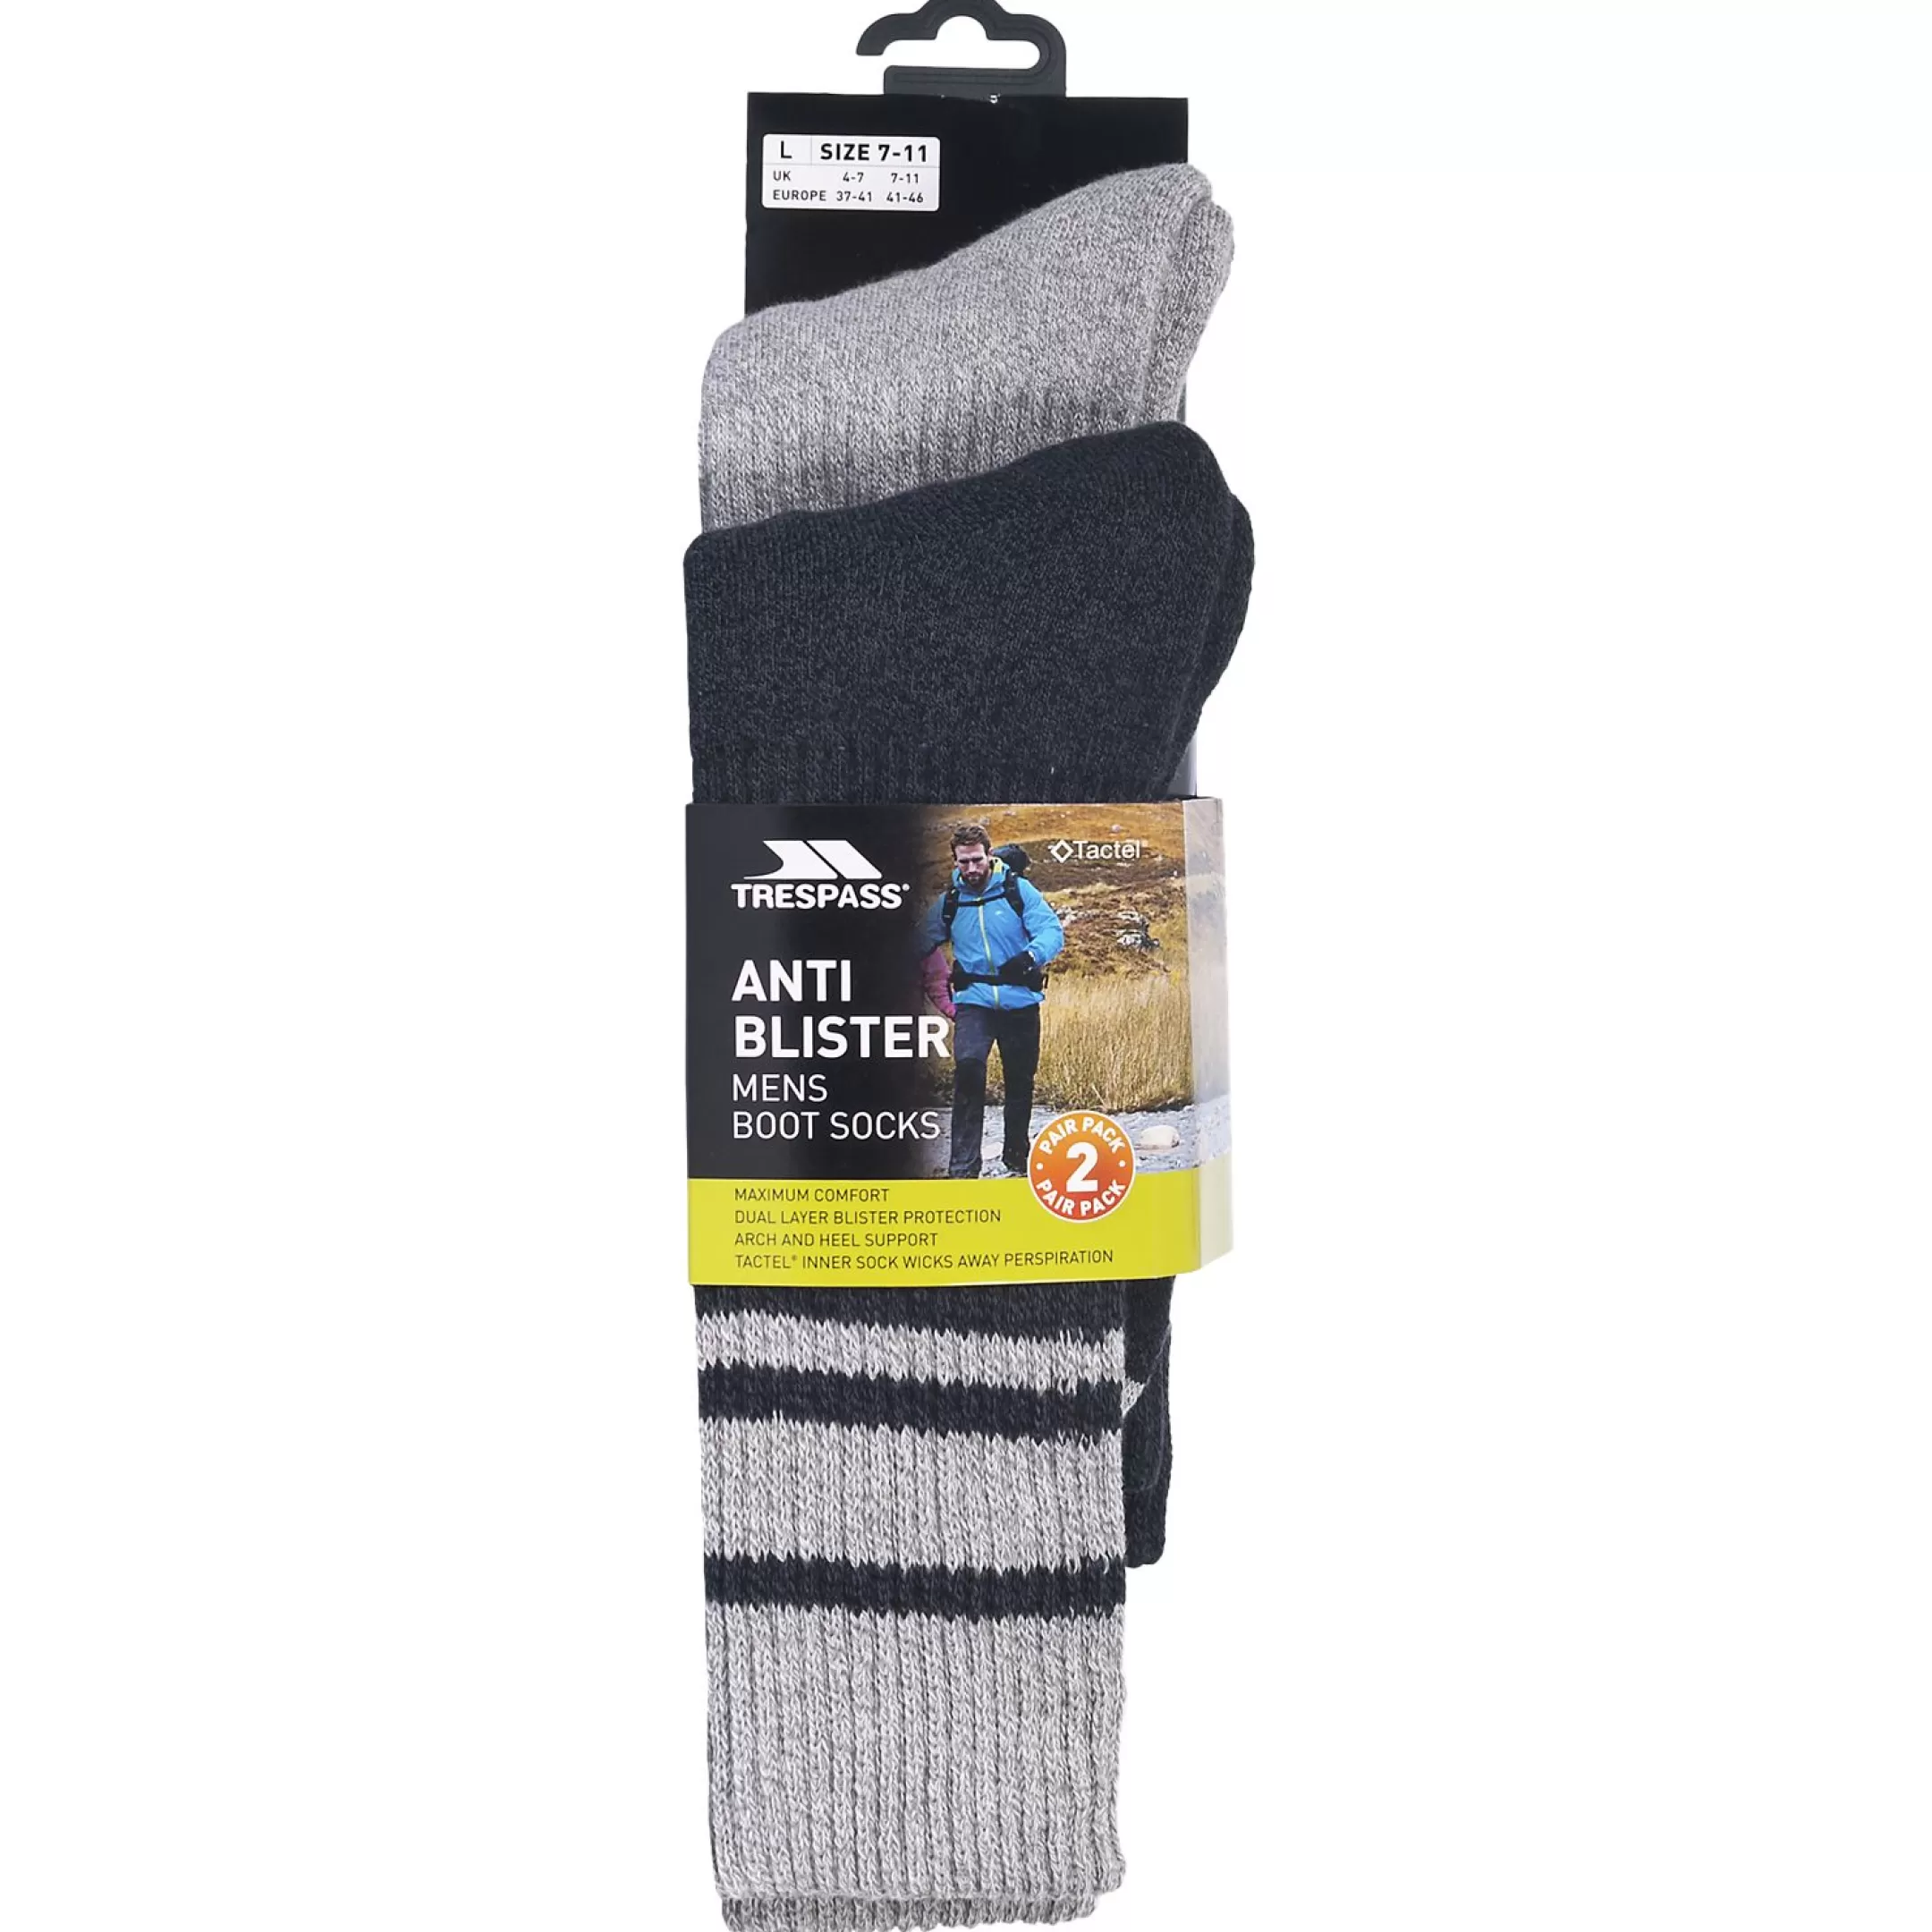 Men’s Anti-Blister Walking Socks Hitched | Trespass New